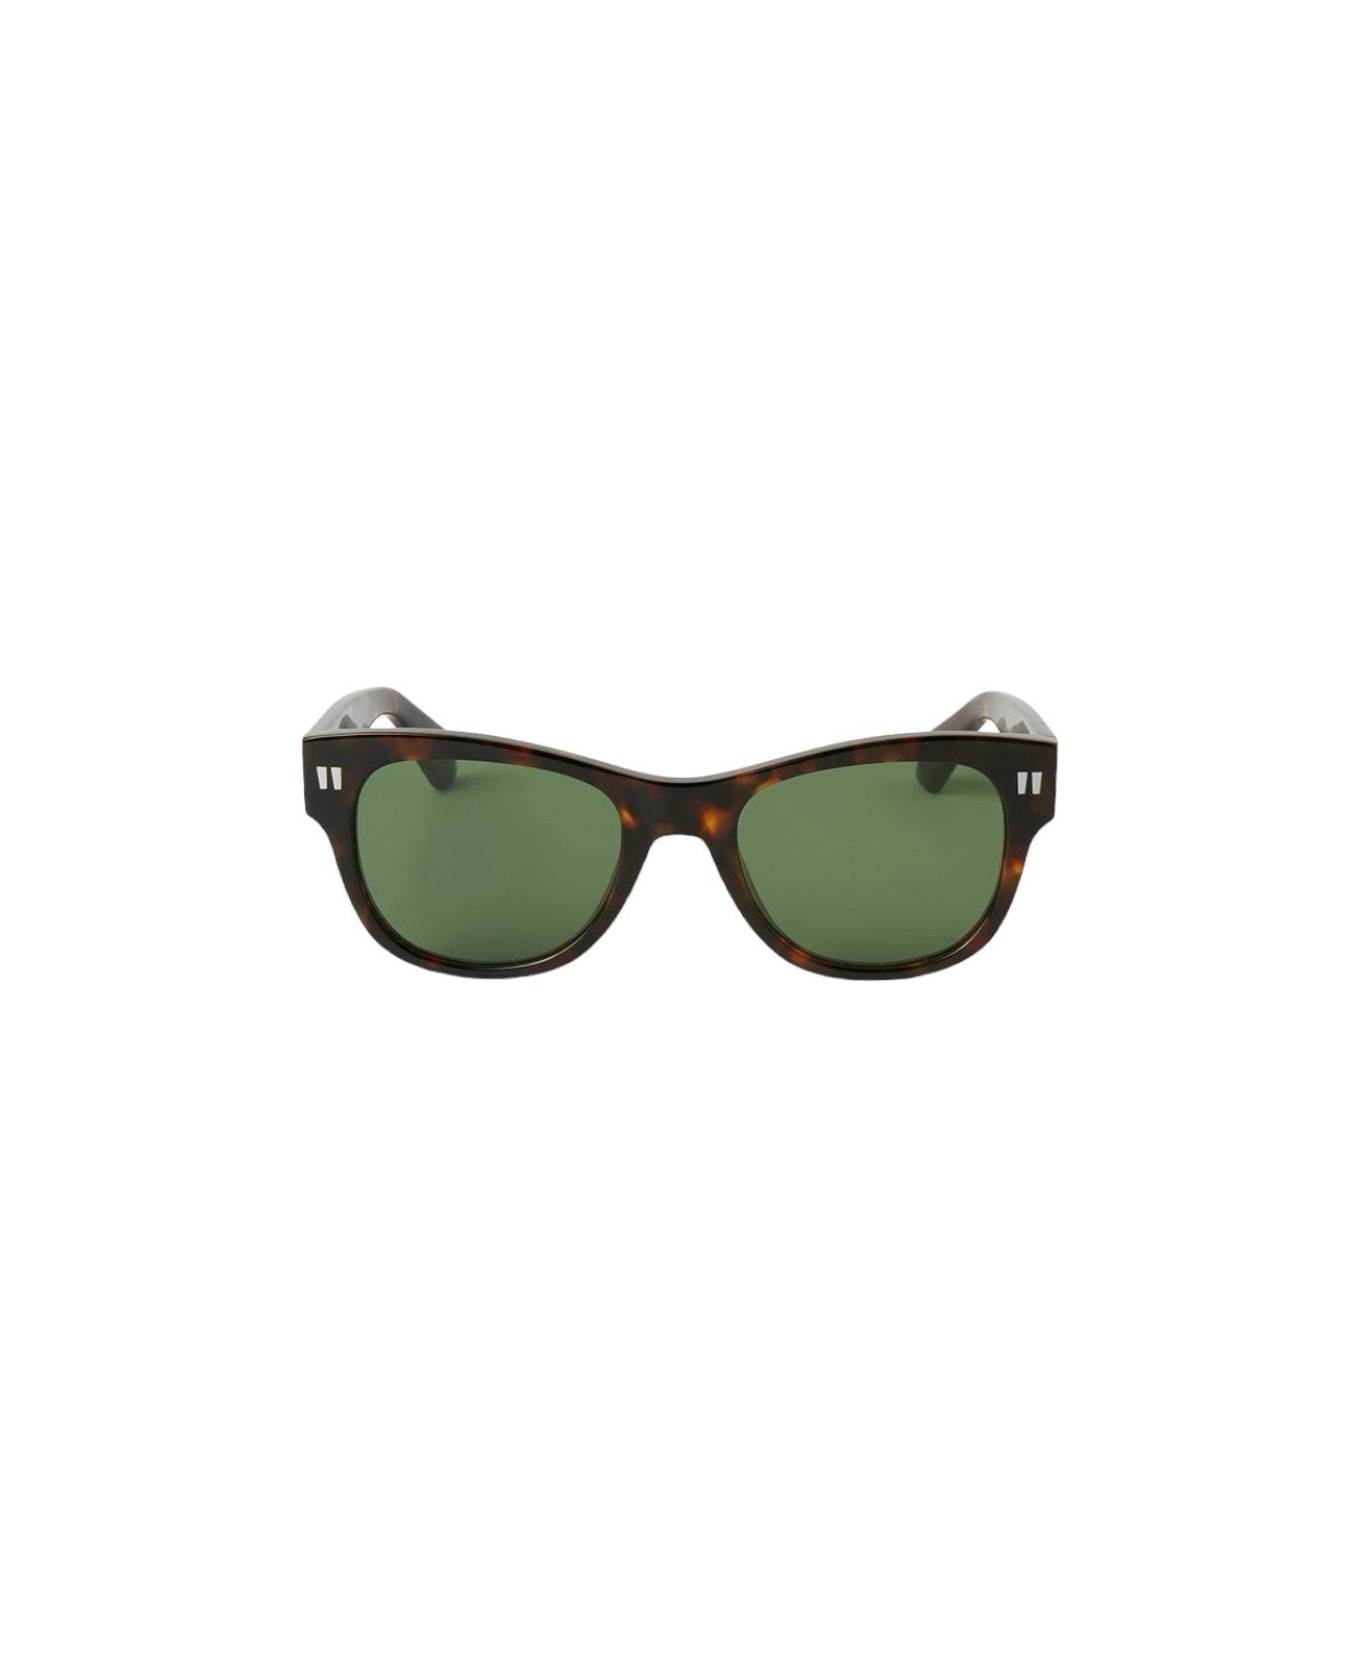 Off-White Moab - Oeri107 Sunglasses サングラス